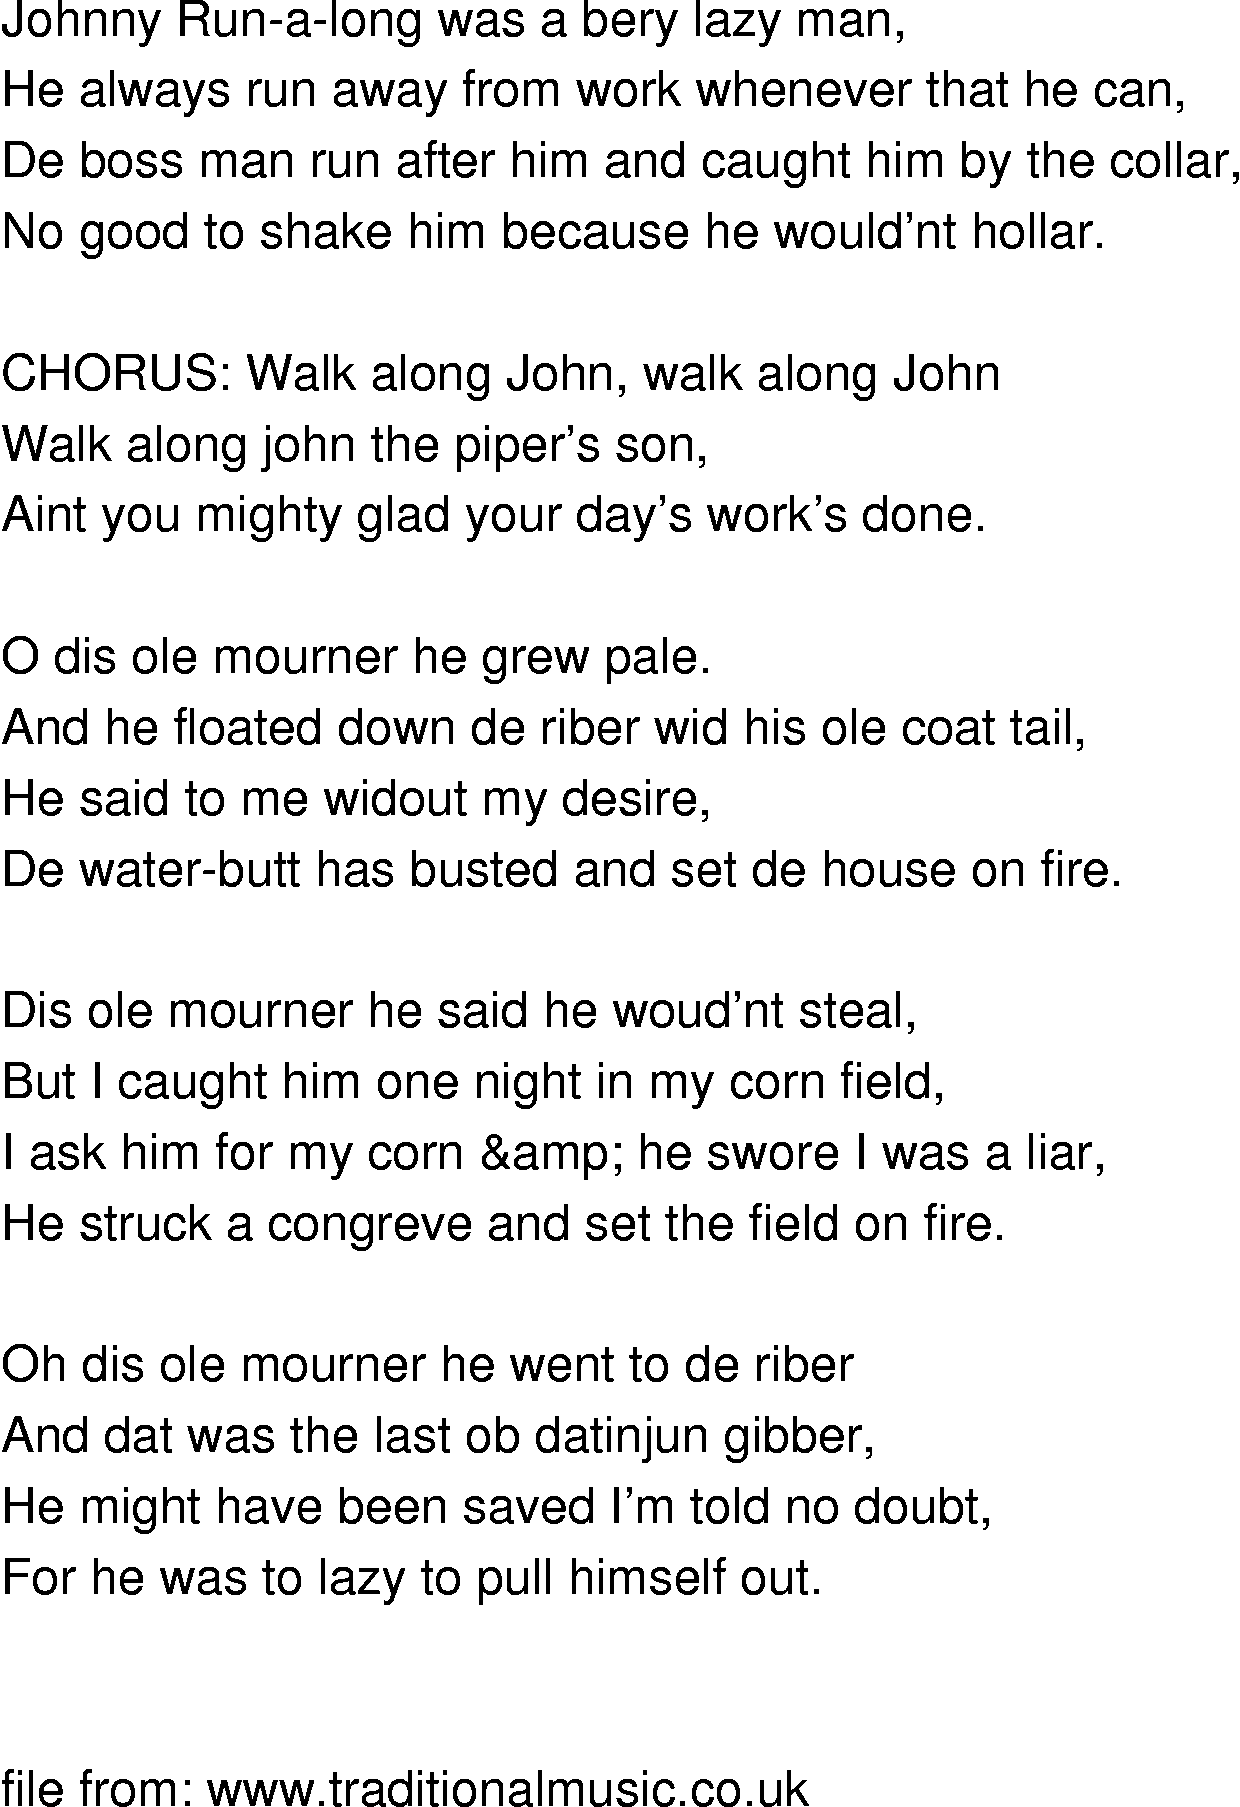 Old-Time (oldtimey) Song Lyrics - walk along john